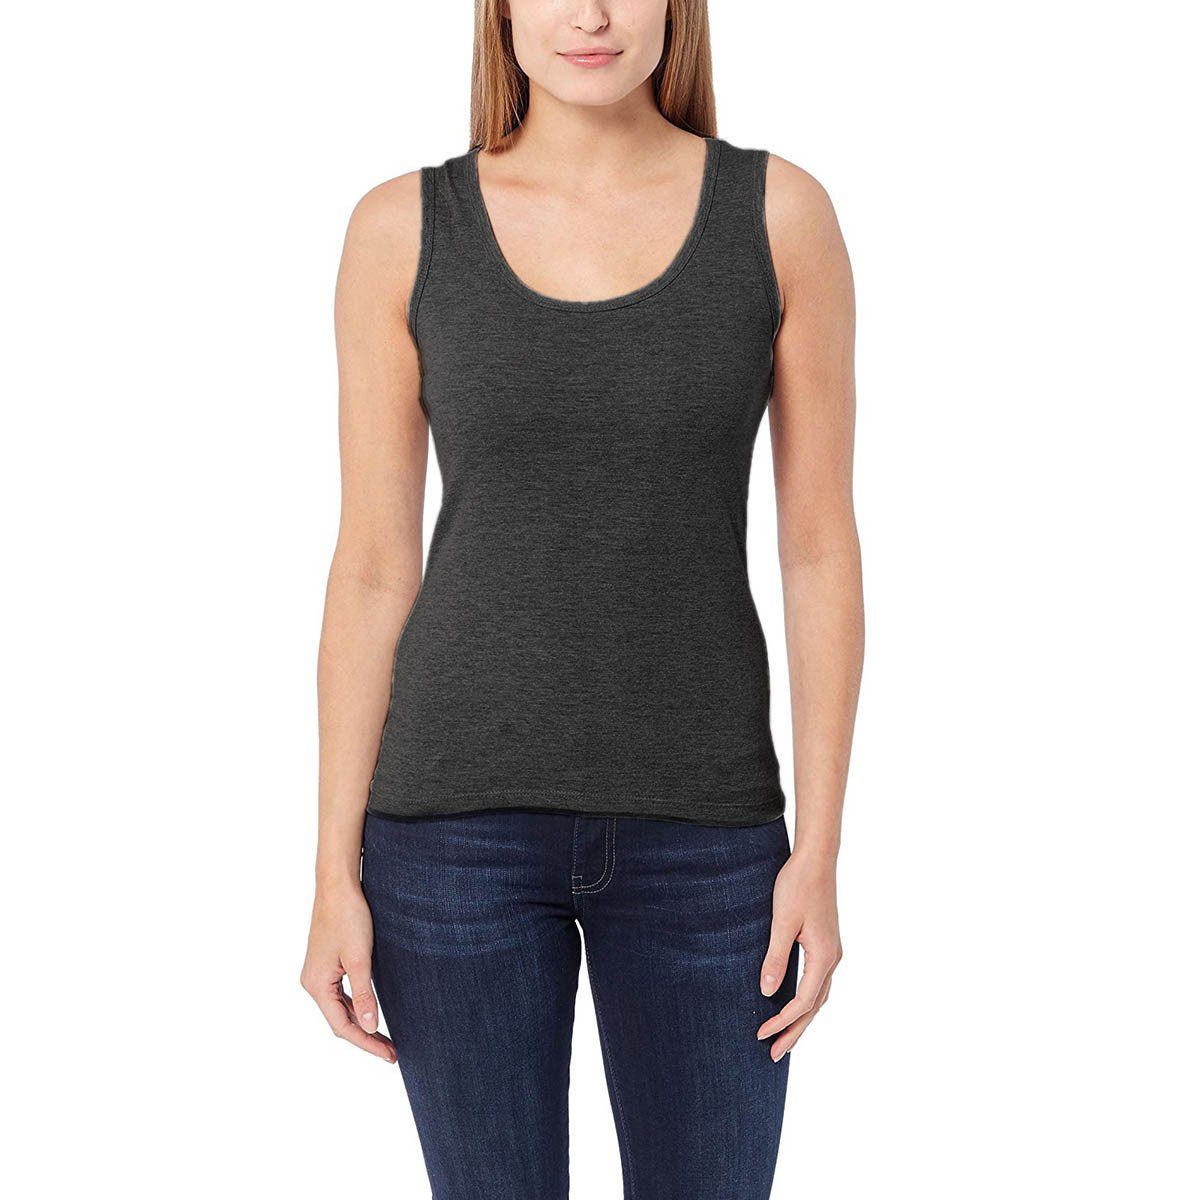 BYD Cropi Vest Women's Tee Shirt Image Charcoal XS 